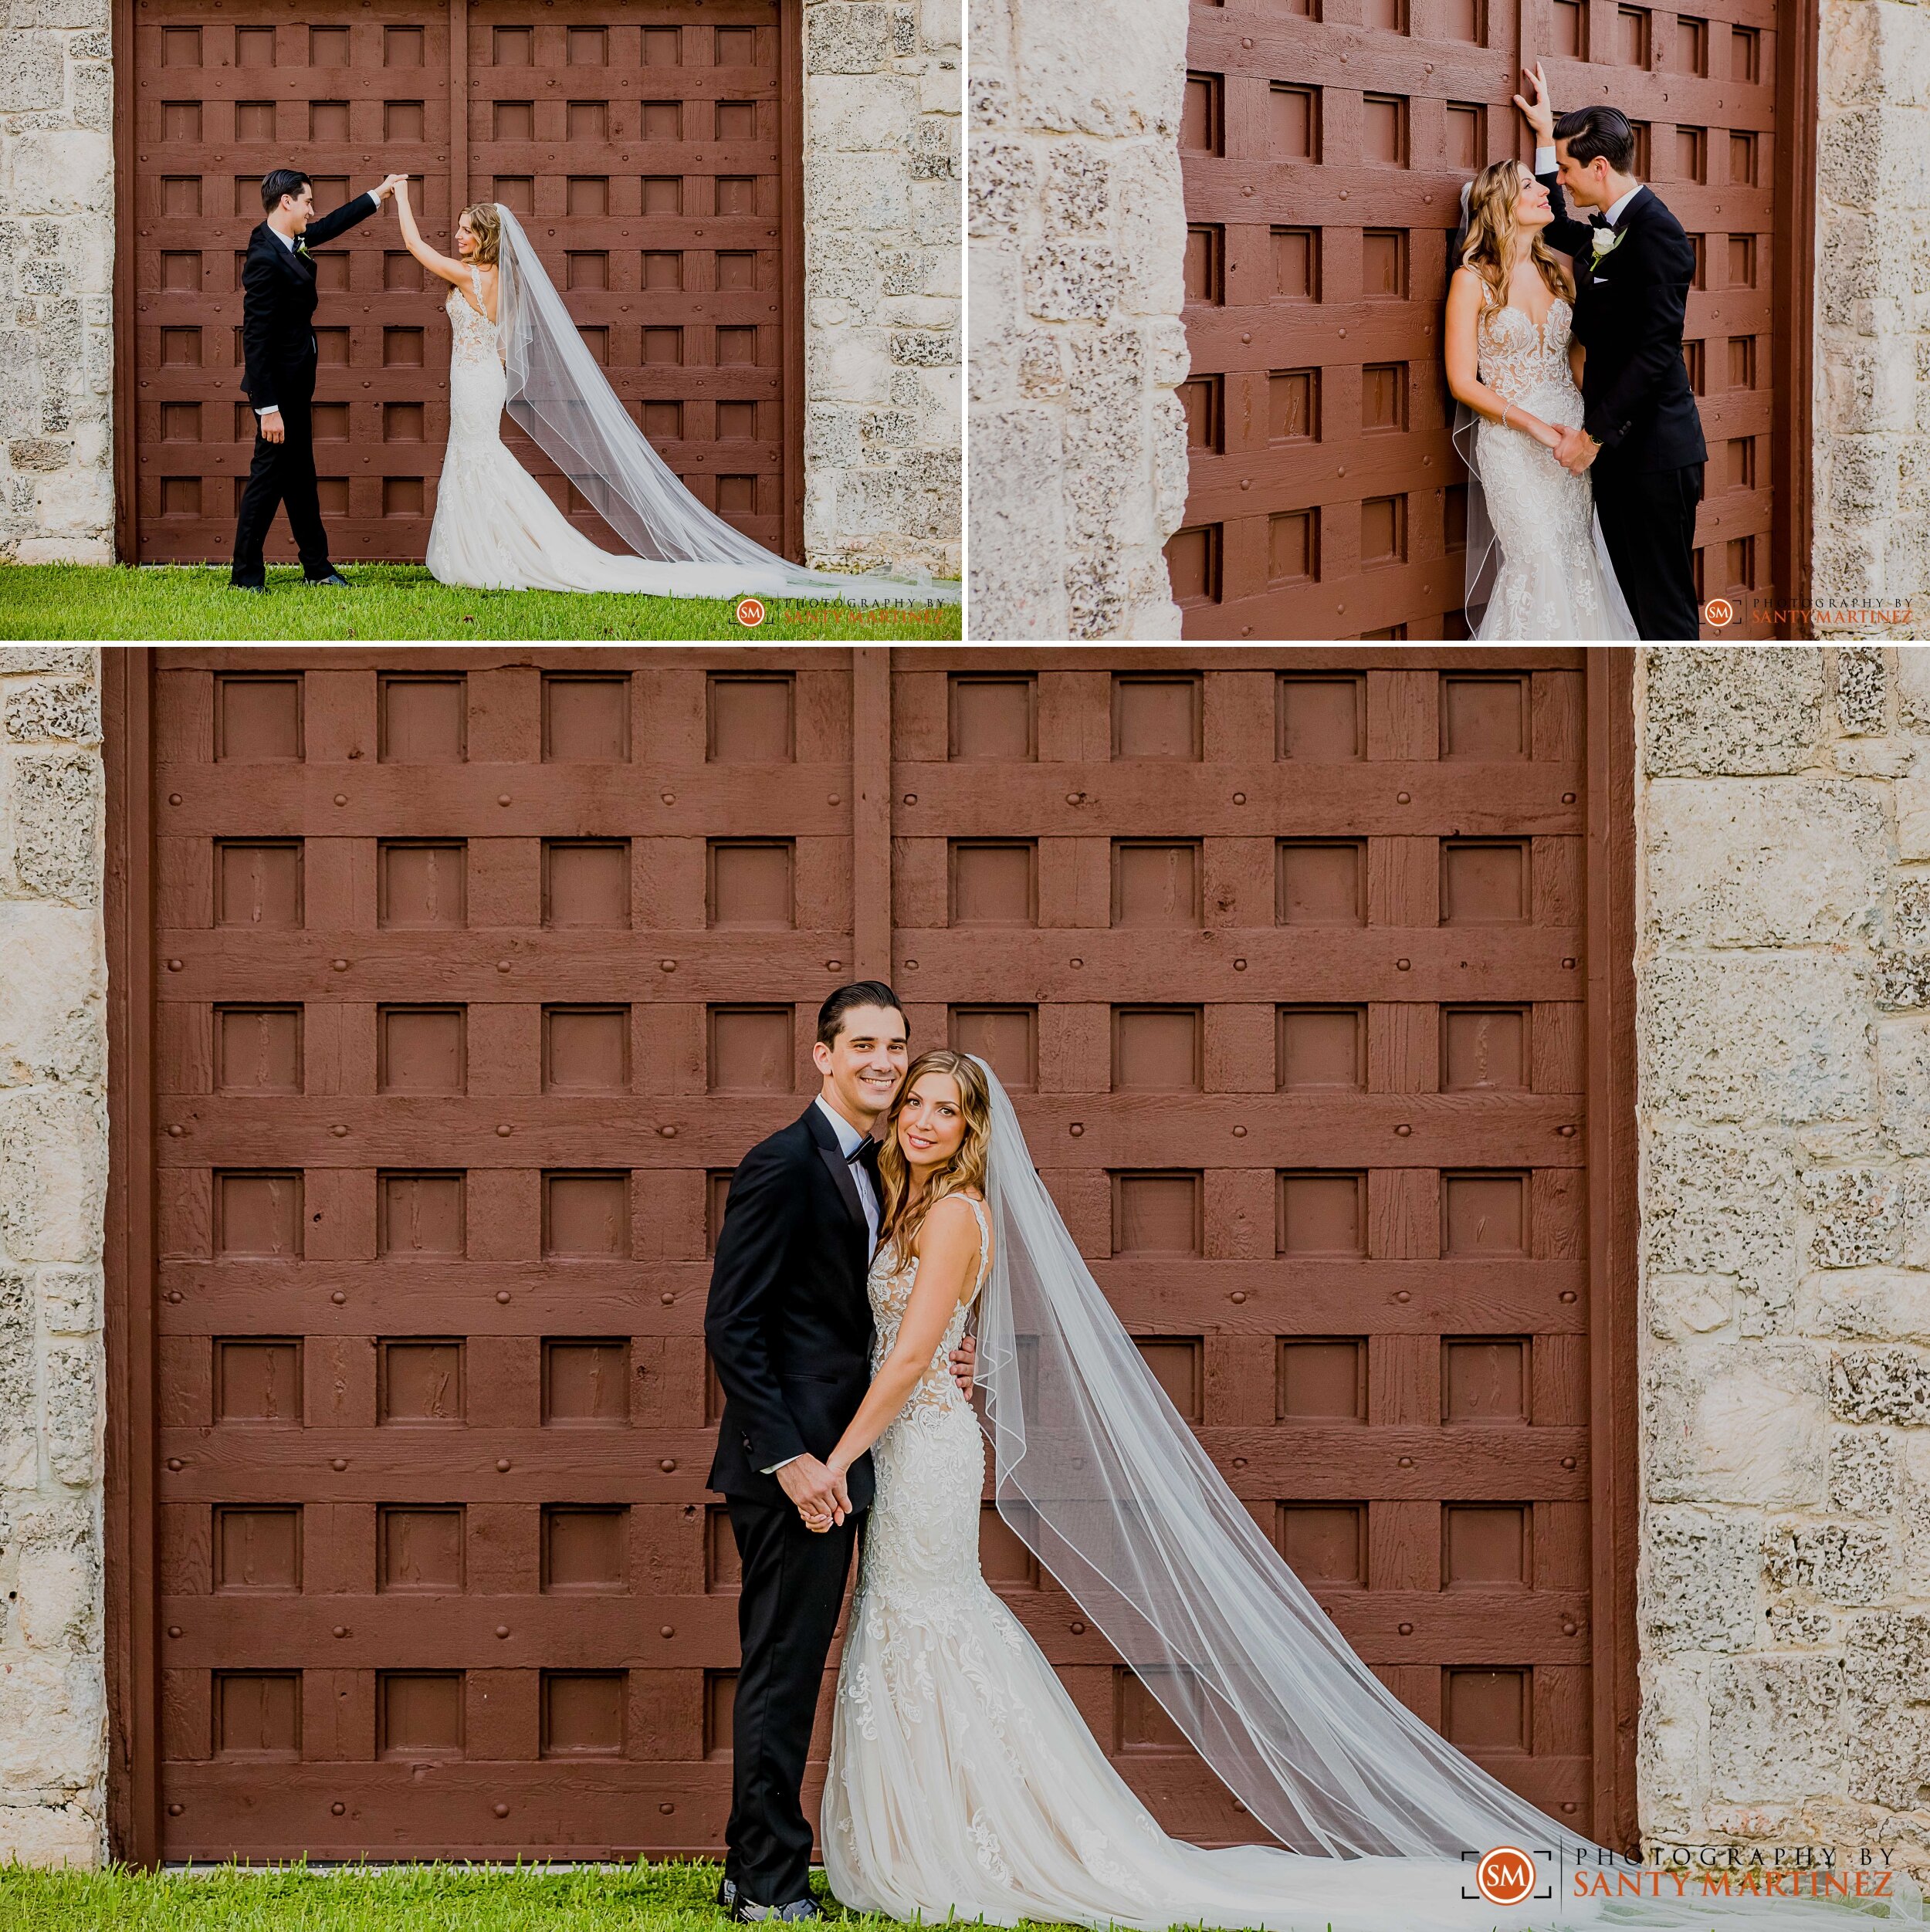 Wedding - The Cooper Estate - Photography by Santy Martinez 24.jpg